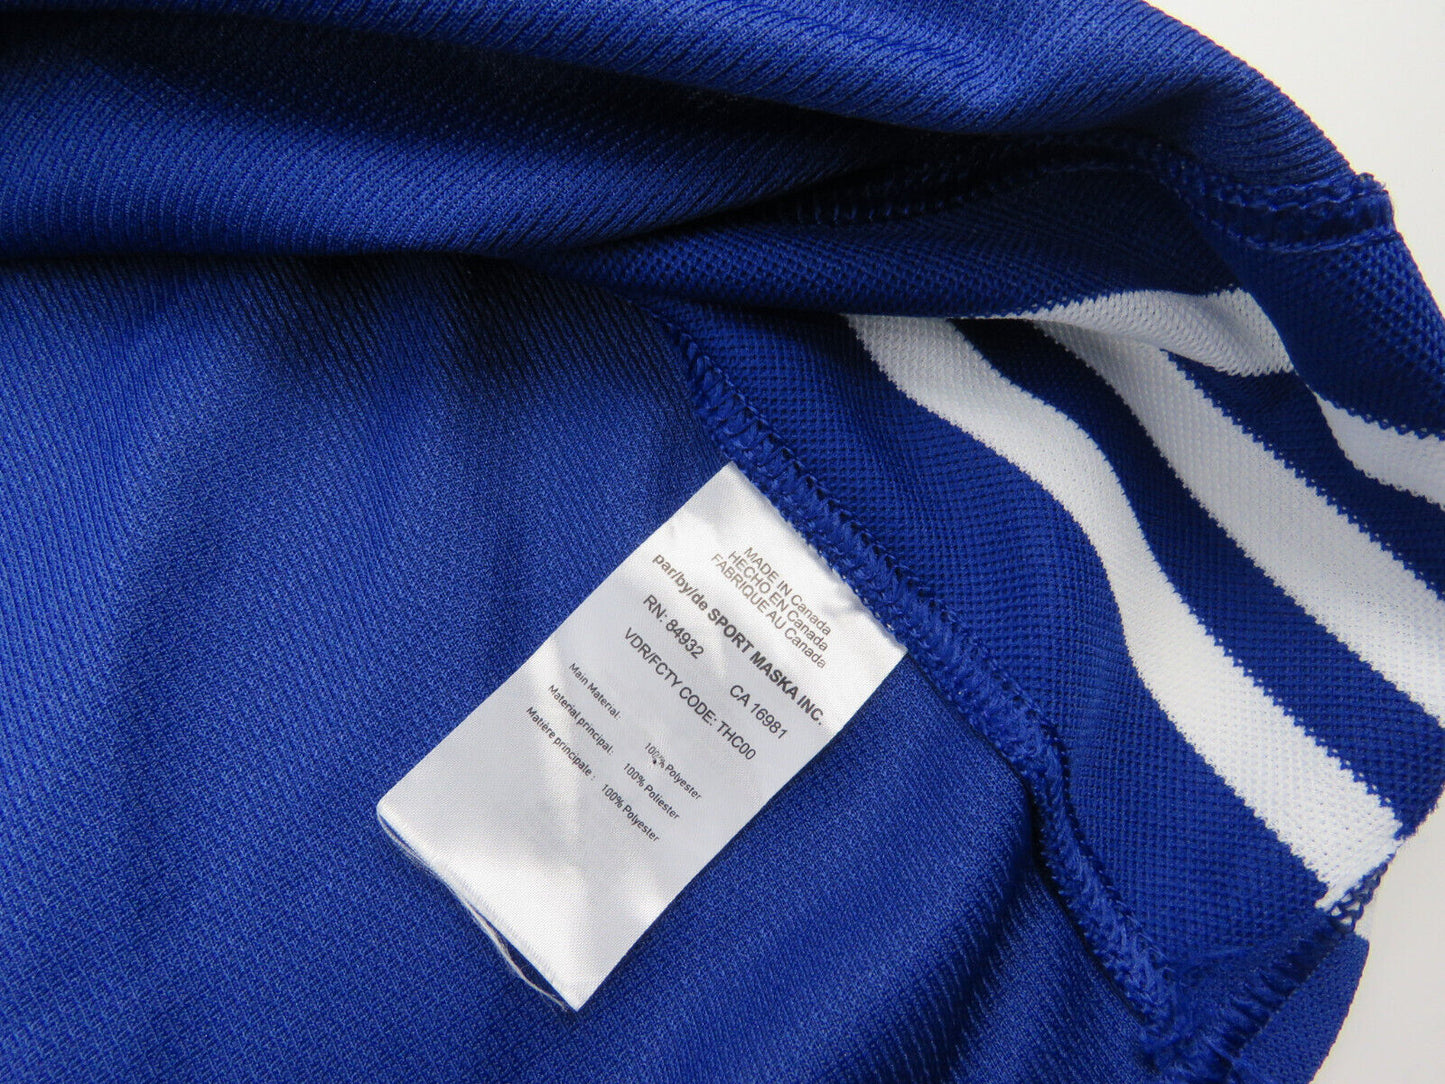 Adidas Toronto Maple Leafs Practice Worn Authentic NHL Hockey Jersey #63 Size 58